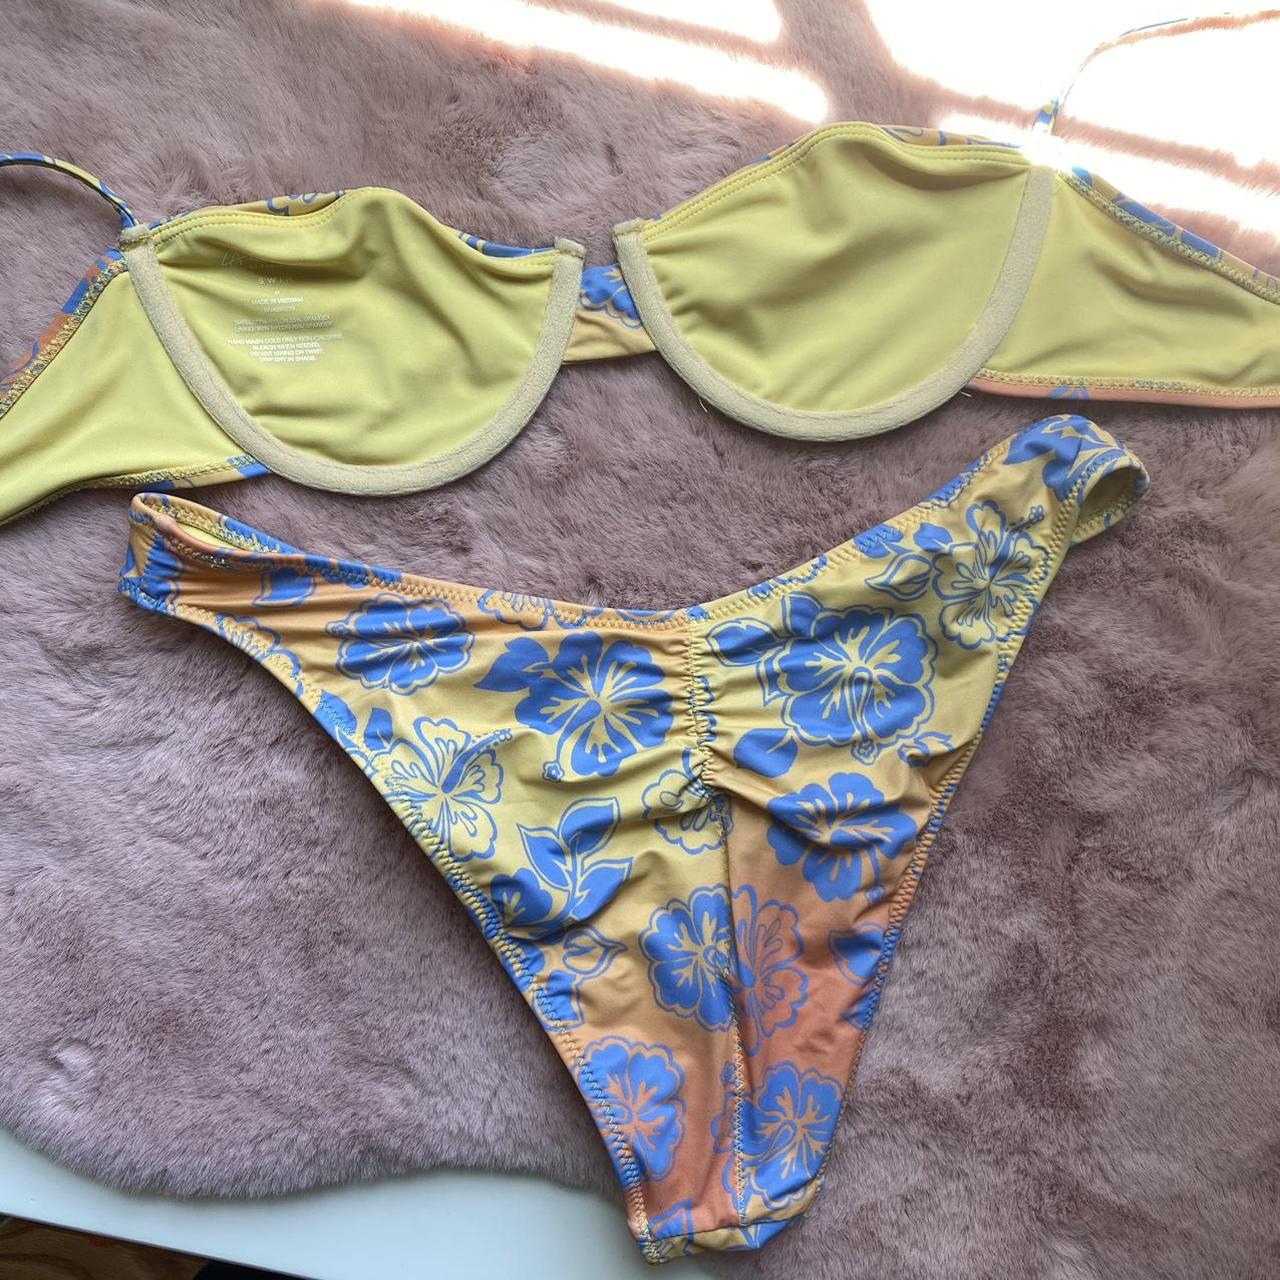 PacSun Women's Blue and Yellow Bikinis-and-tankini-sets (2)